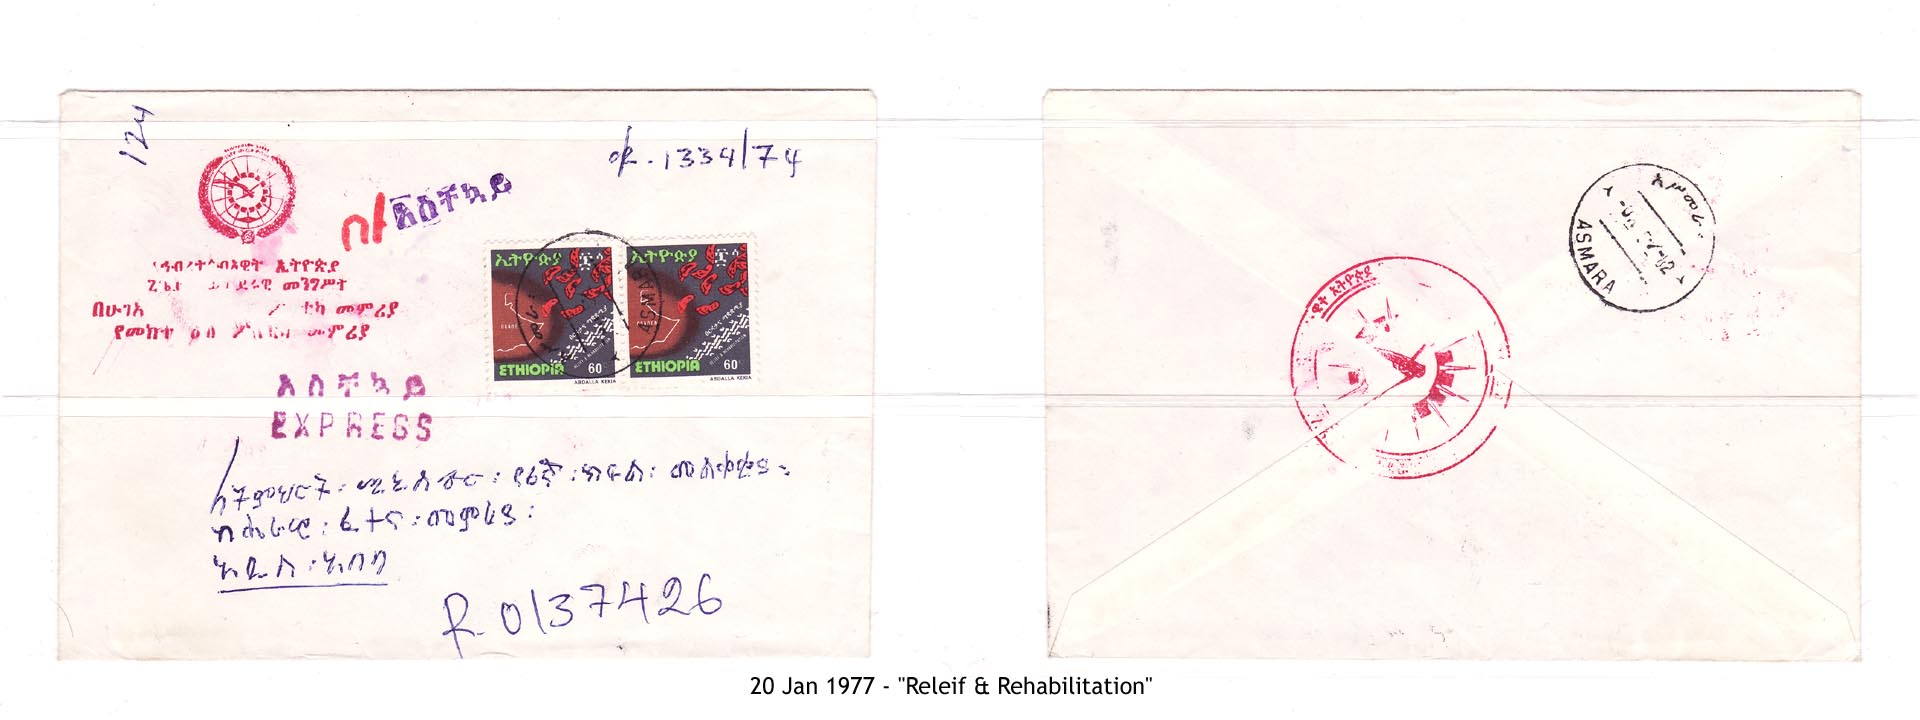 19770120 - Releif and Rehabilitation